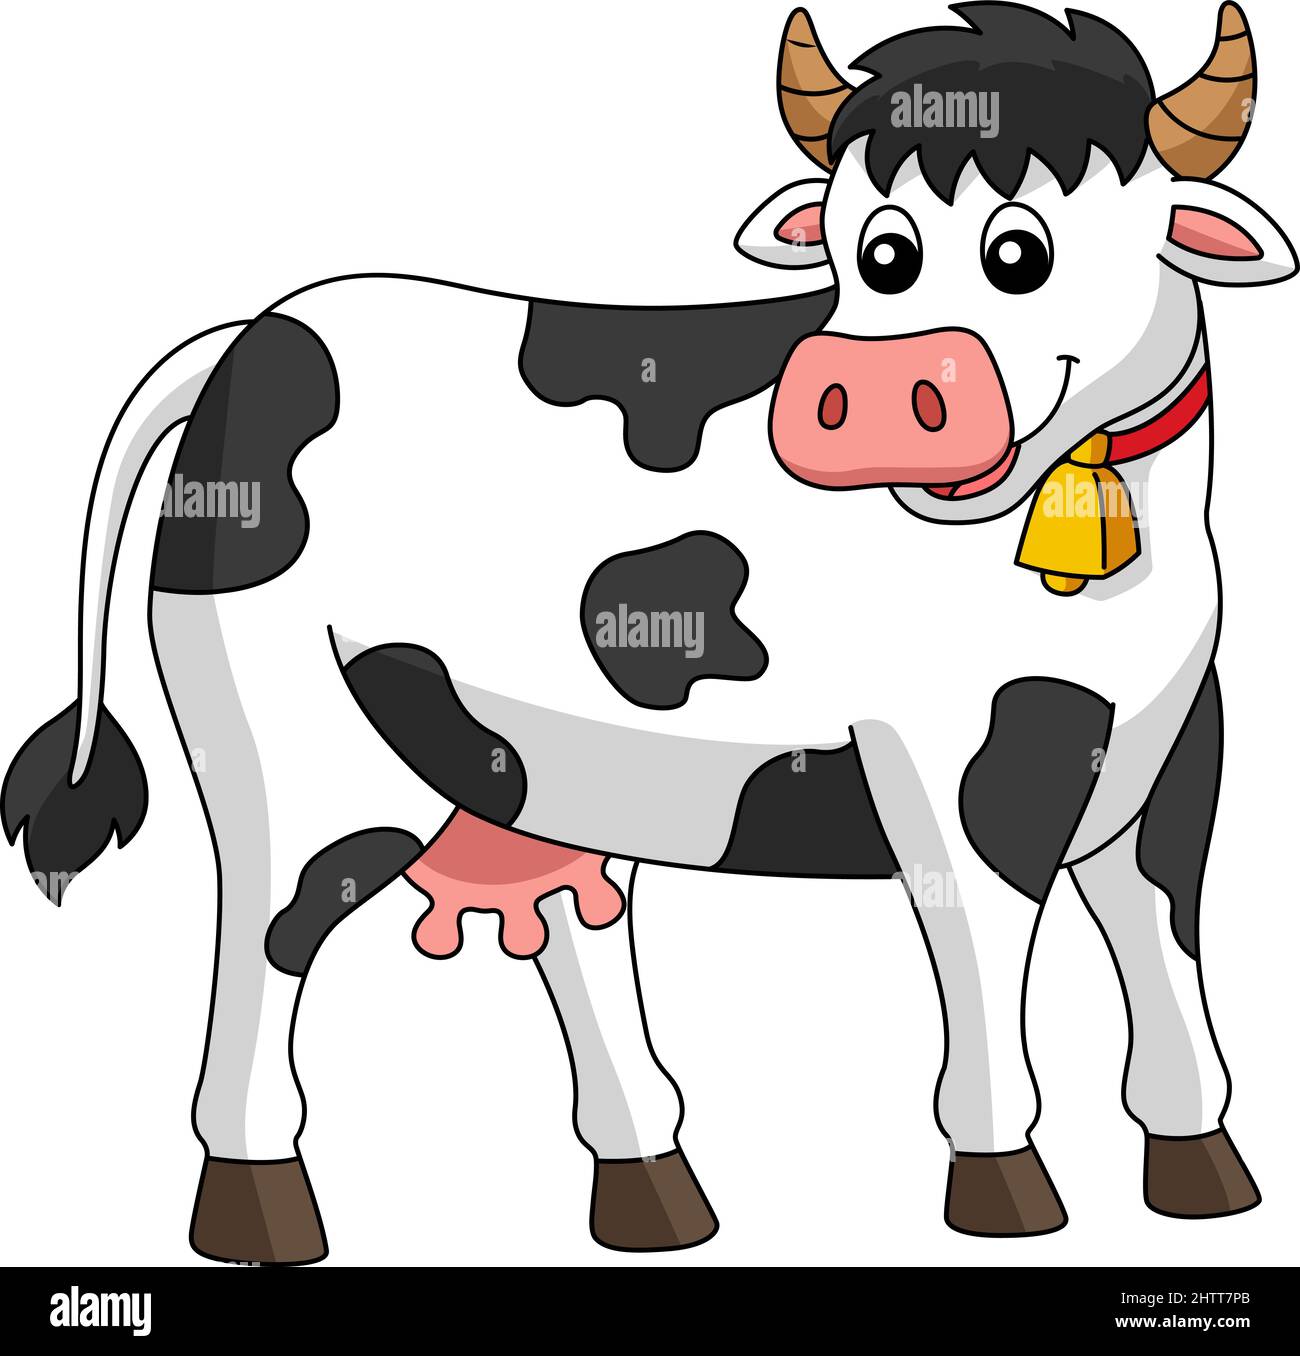 File:Cow cartoon 04.svg - Wikipedia